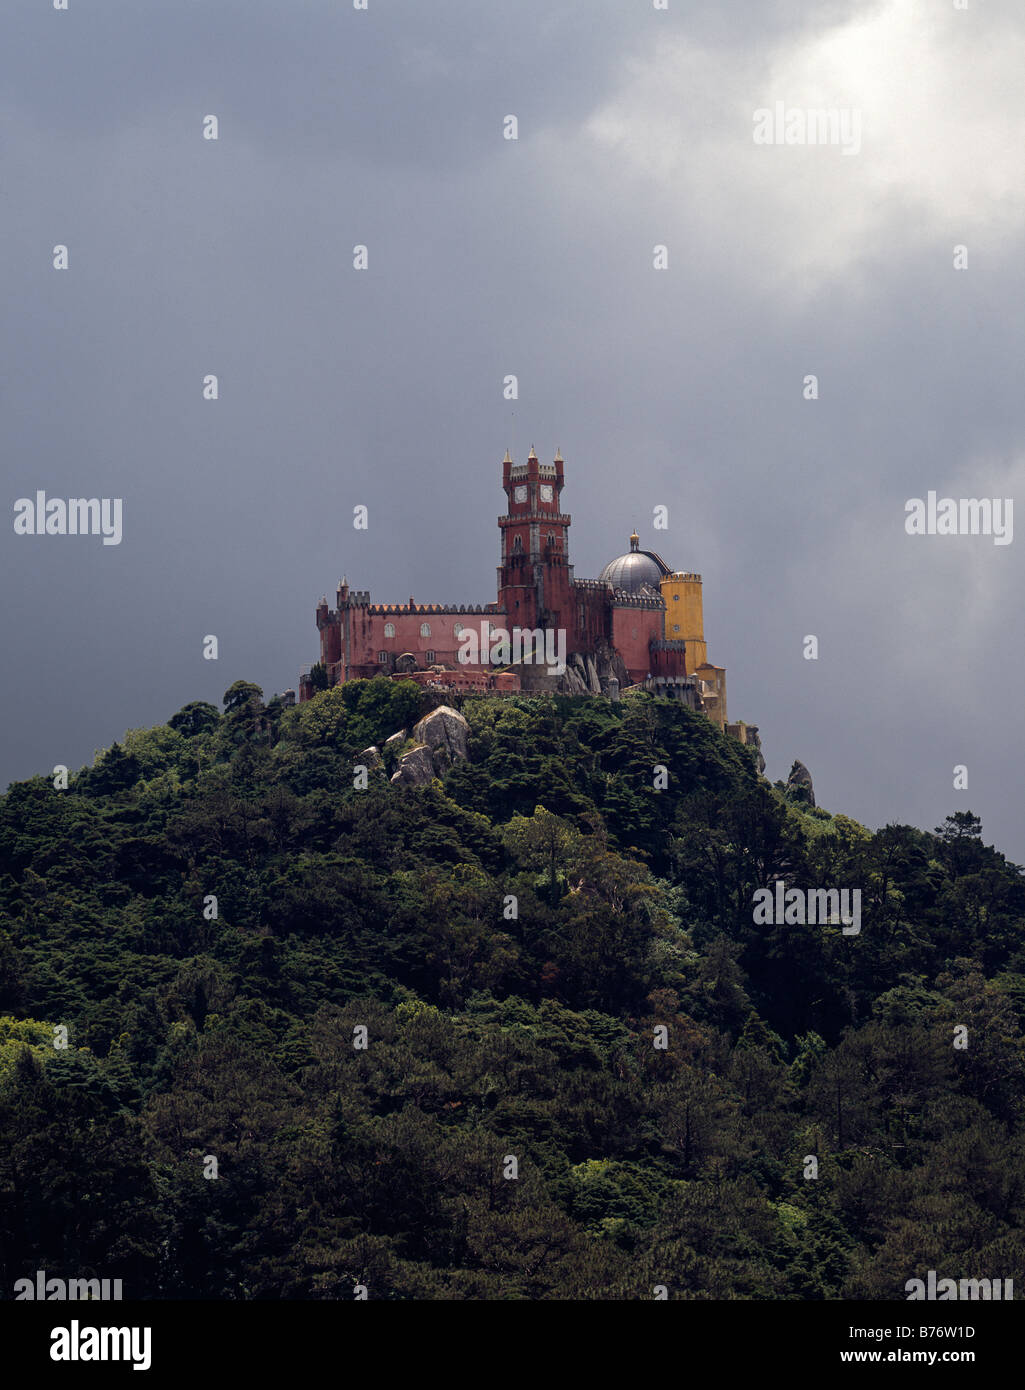 https://c8.alamy.com/comp/B76W1D/palacio-da-pena-sintra-portugal-a-romantic-fantasy-castle-on-a-mountaintop-B76W1D.jpg